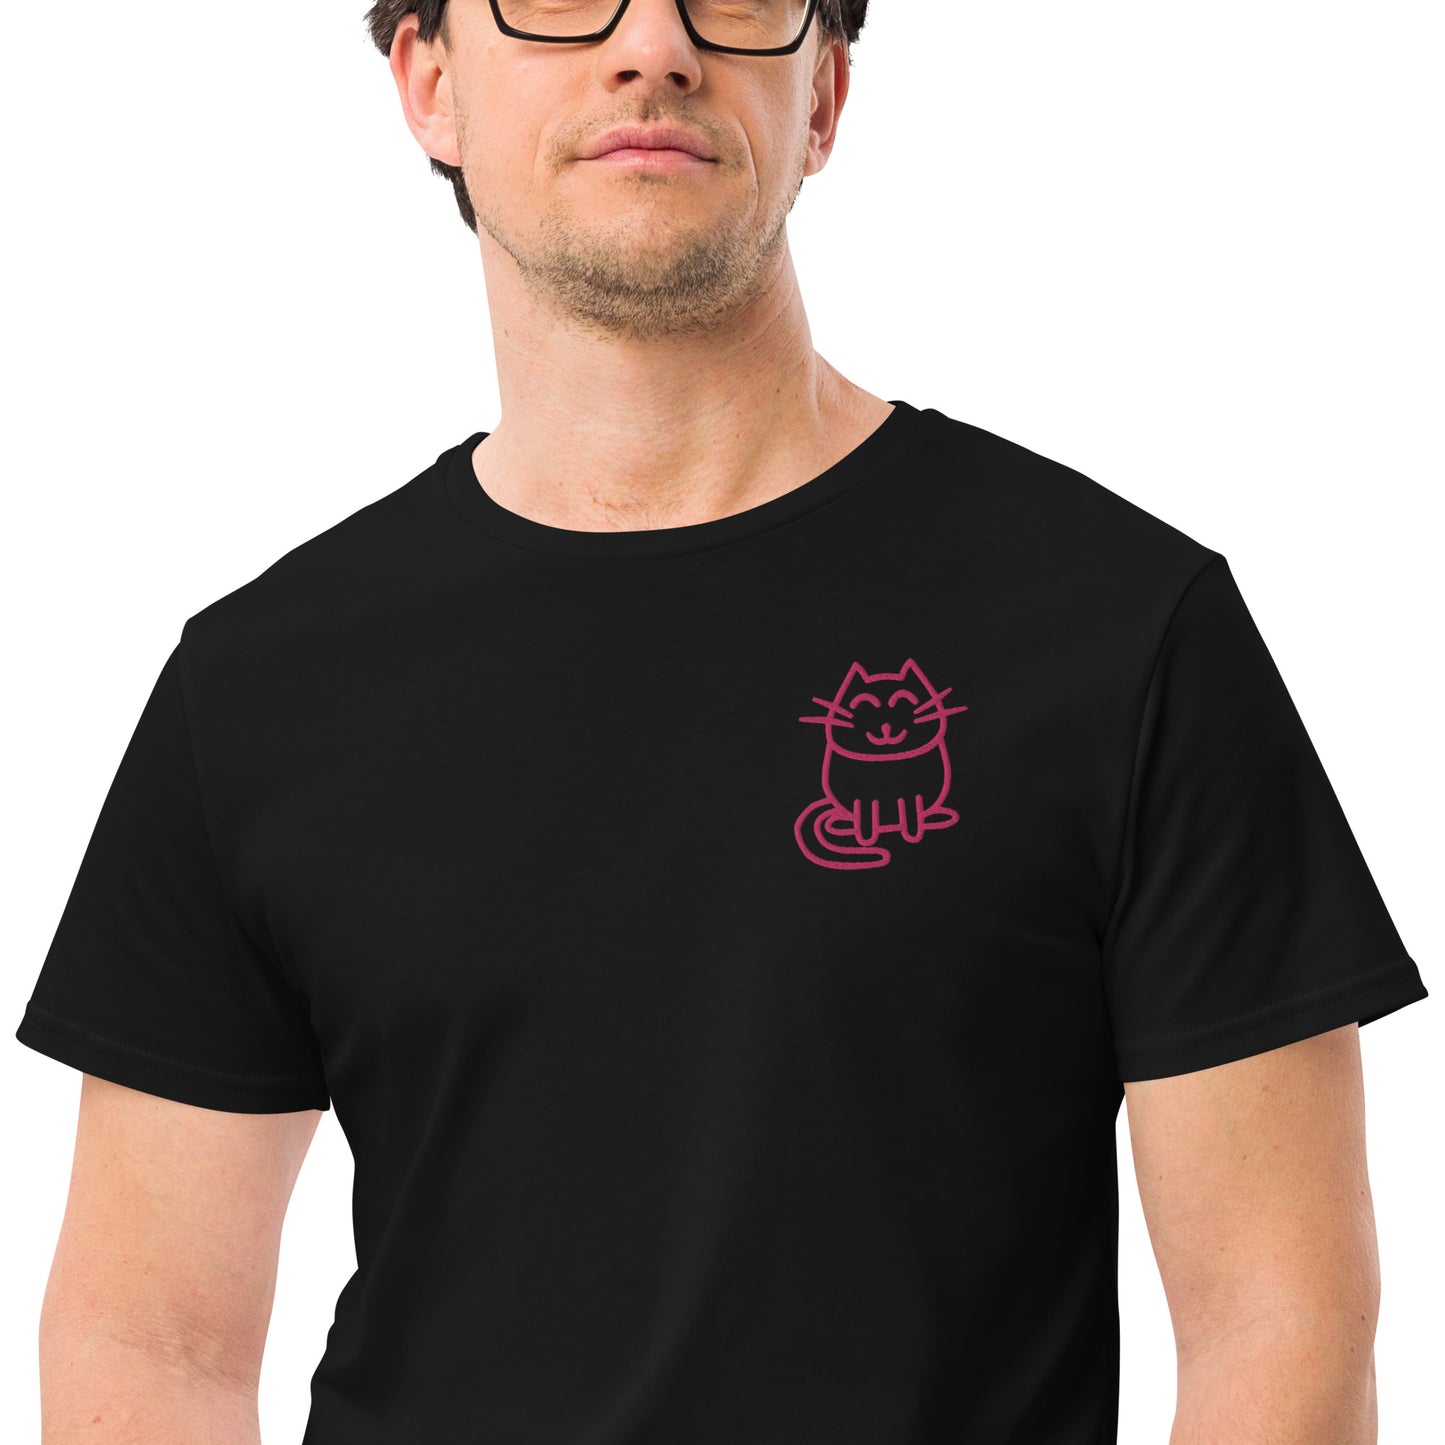 Men's premium cotton t-shirt(Embroidered)